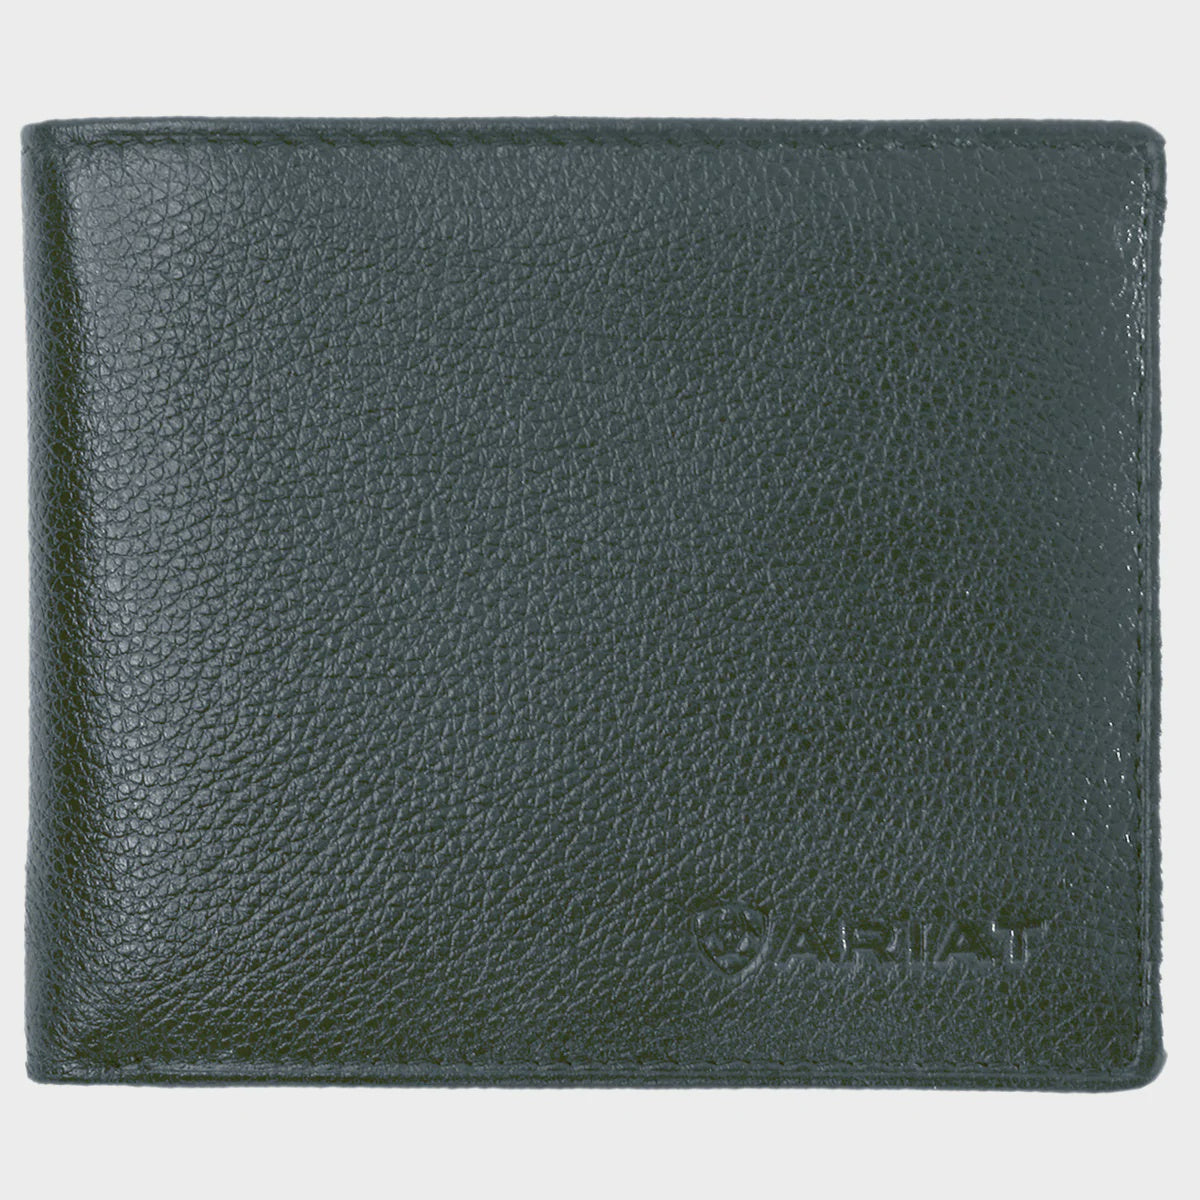 Ariat Bi-Fold Wallet - Black WLT2106A